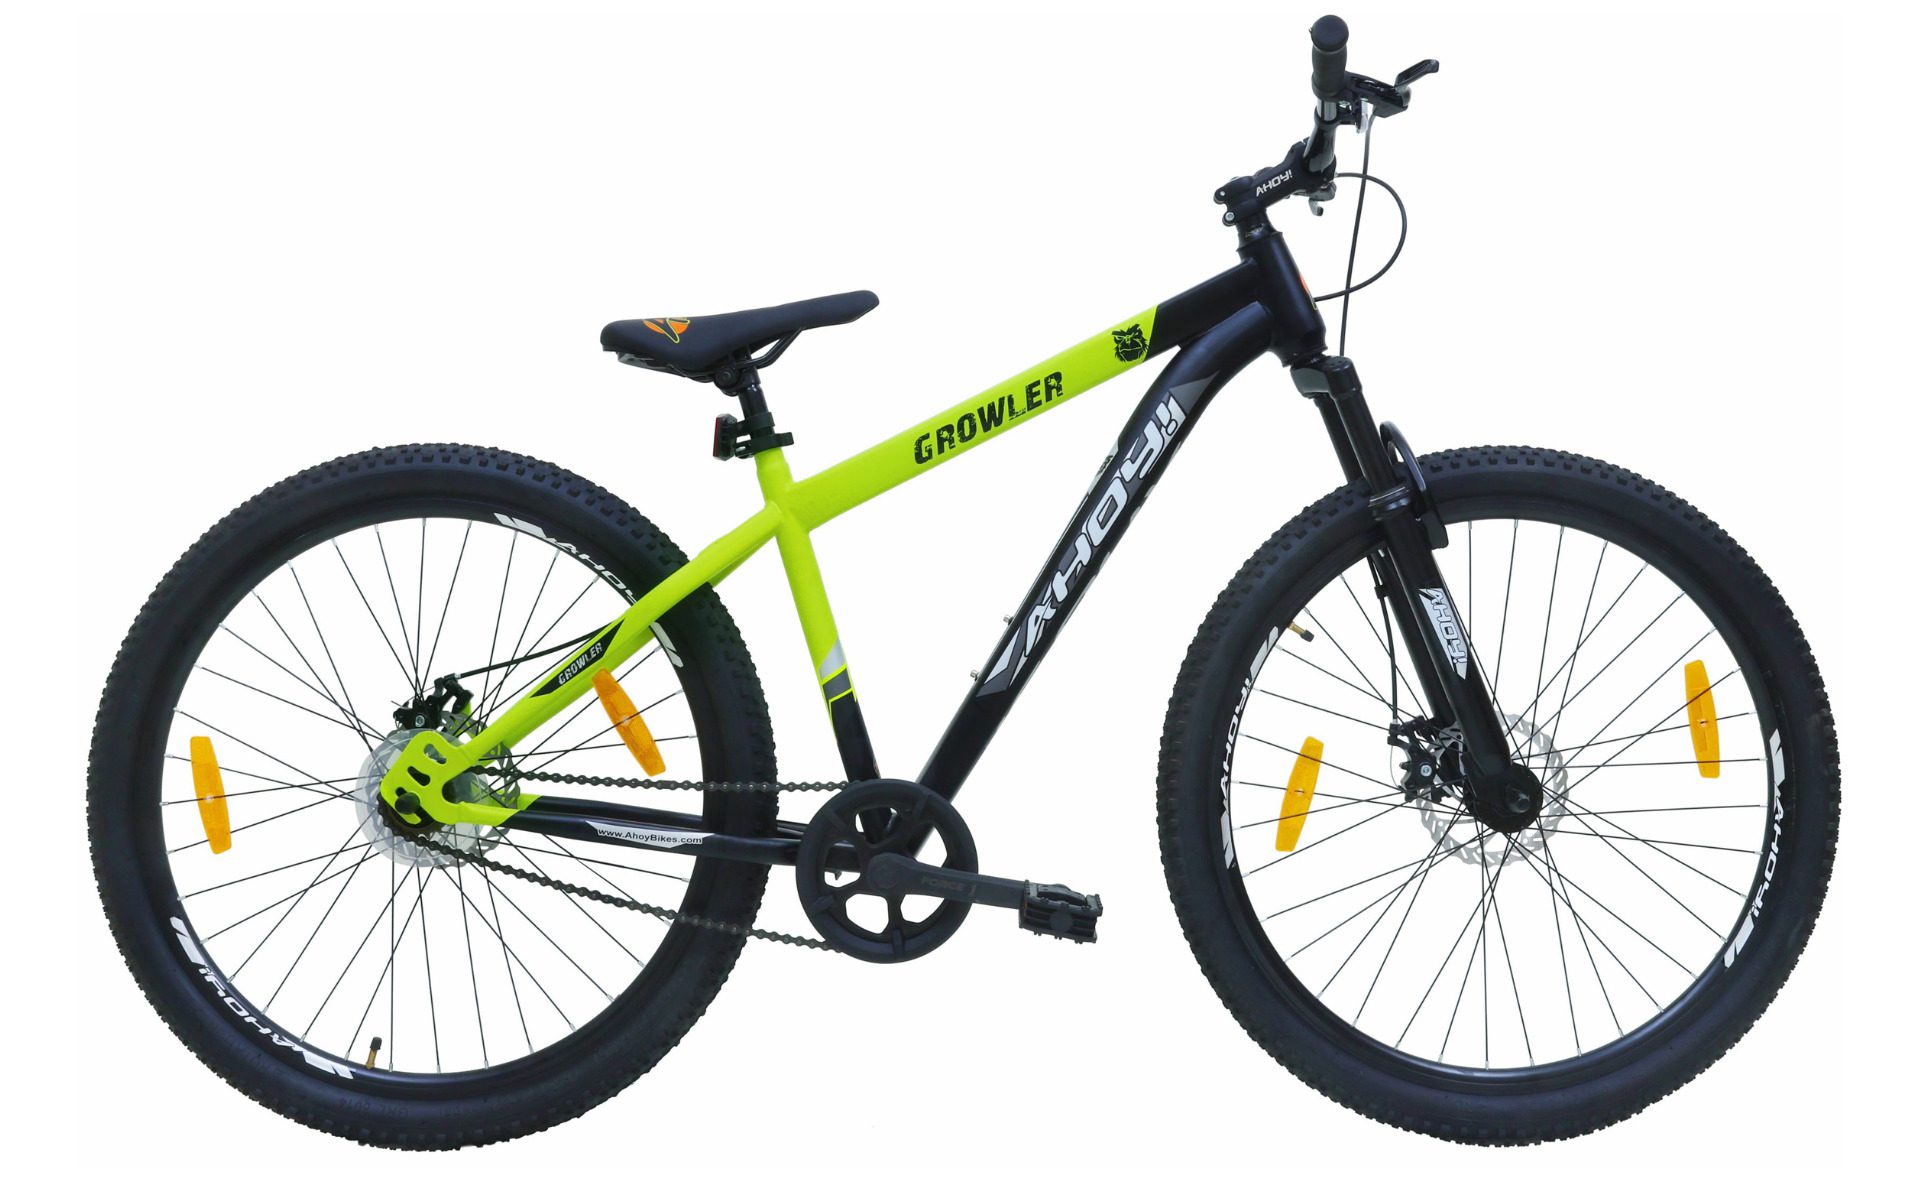 Growler Non Gear Bike 27.5T | Buy Yellow Non Gear Cycle for Men